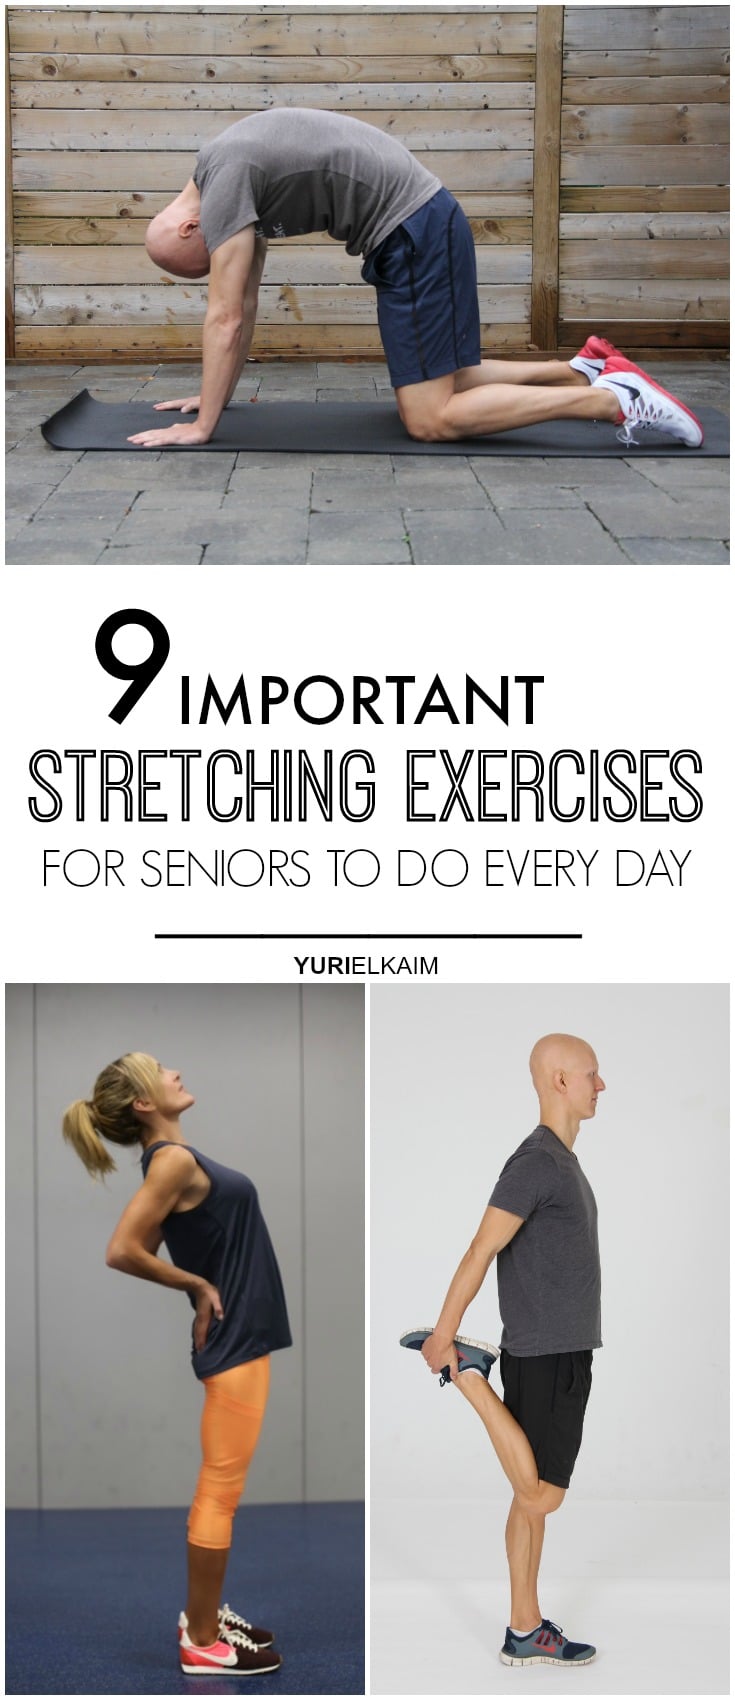 9 Important Stretching Exercises for Seniors to Do Every Day | Yuri Elkaim